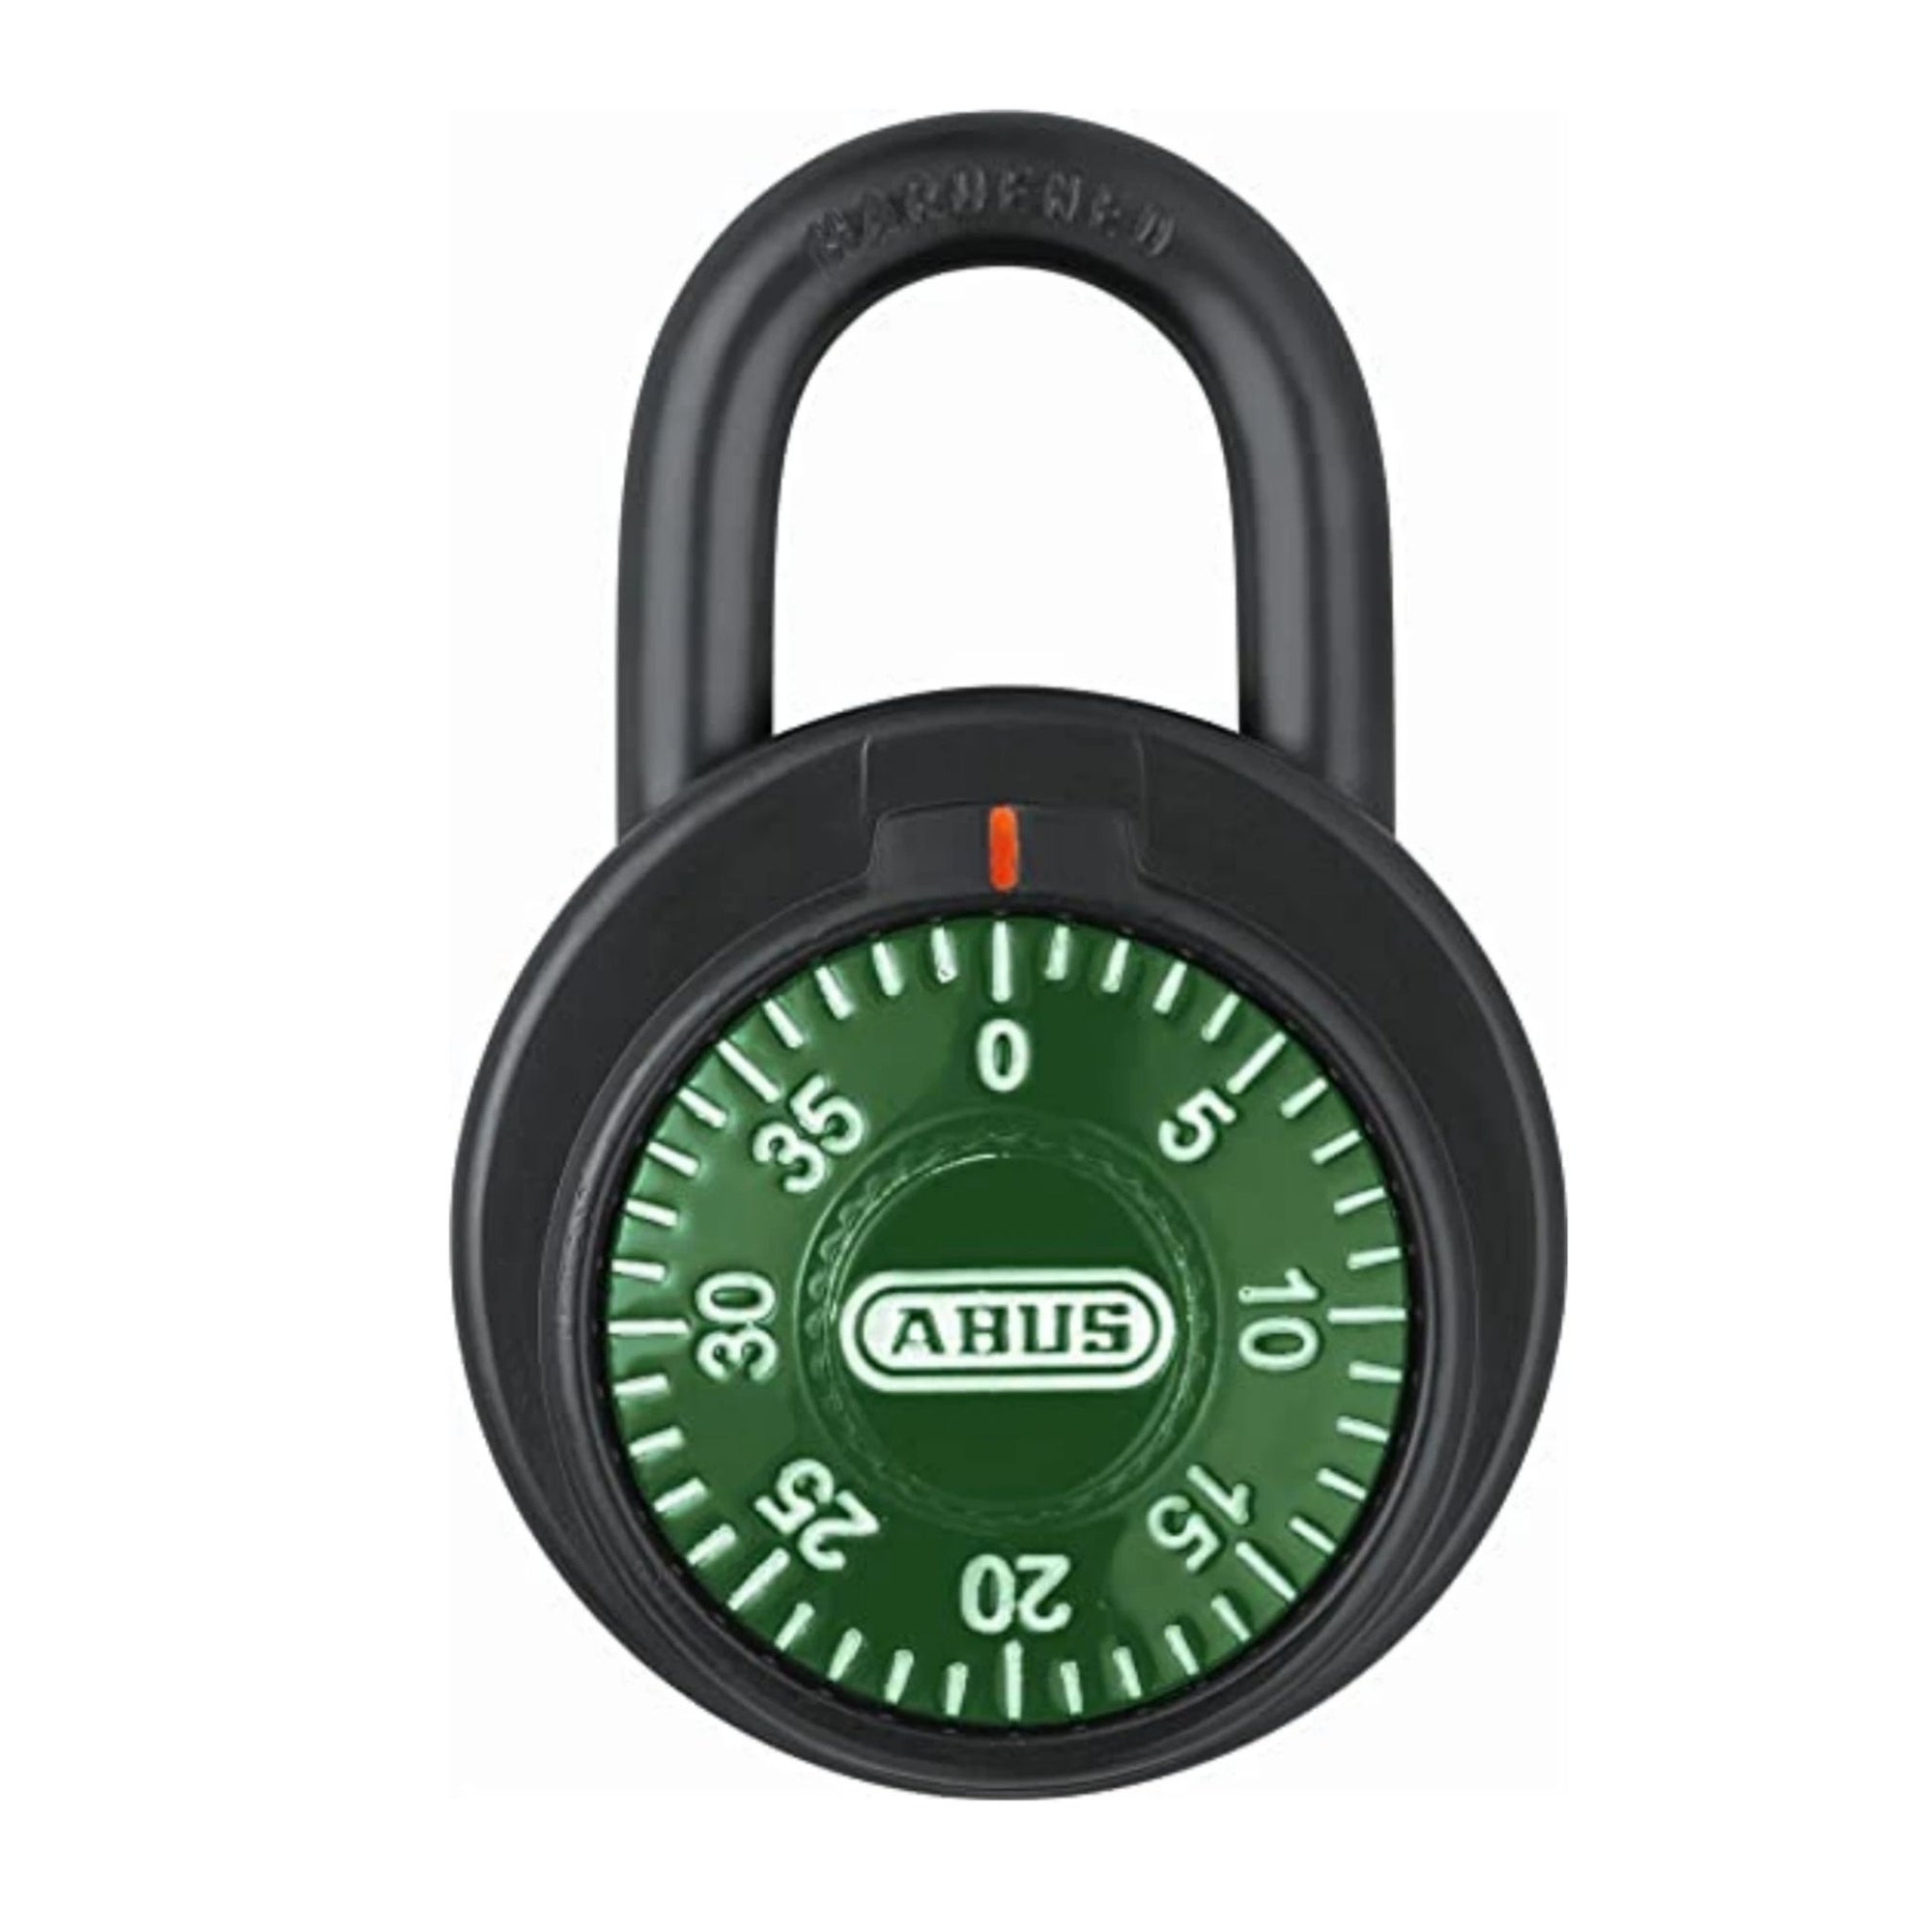 Abus 78/50 KC KA 507A Green Locker Padlock with Key Control Matched to Key Number KA507A - The Lock Source